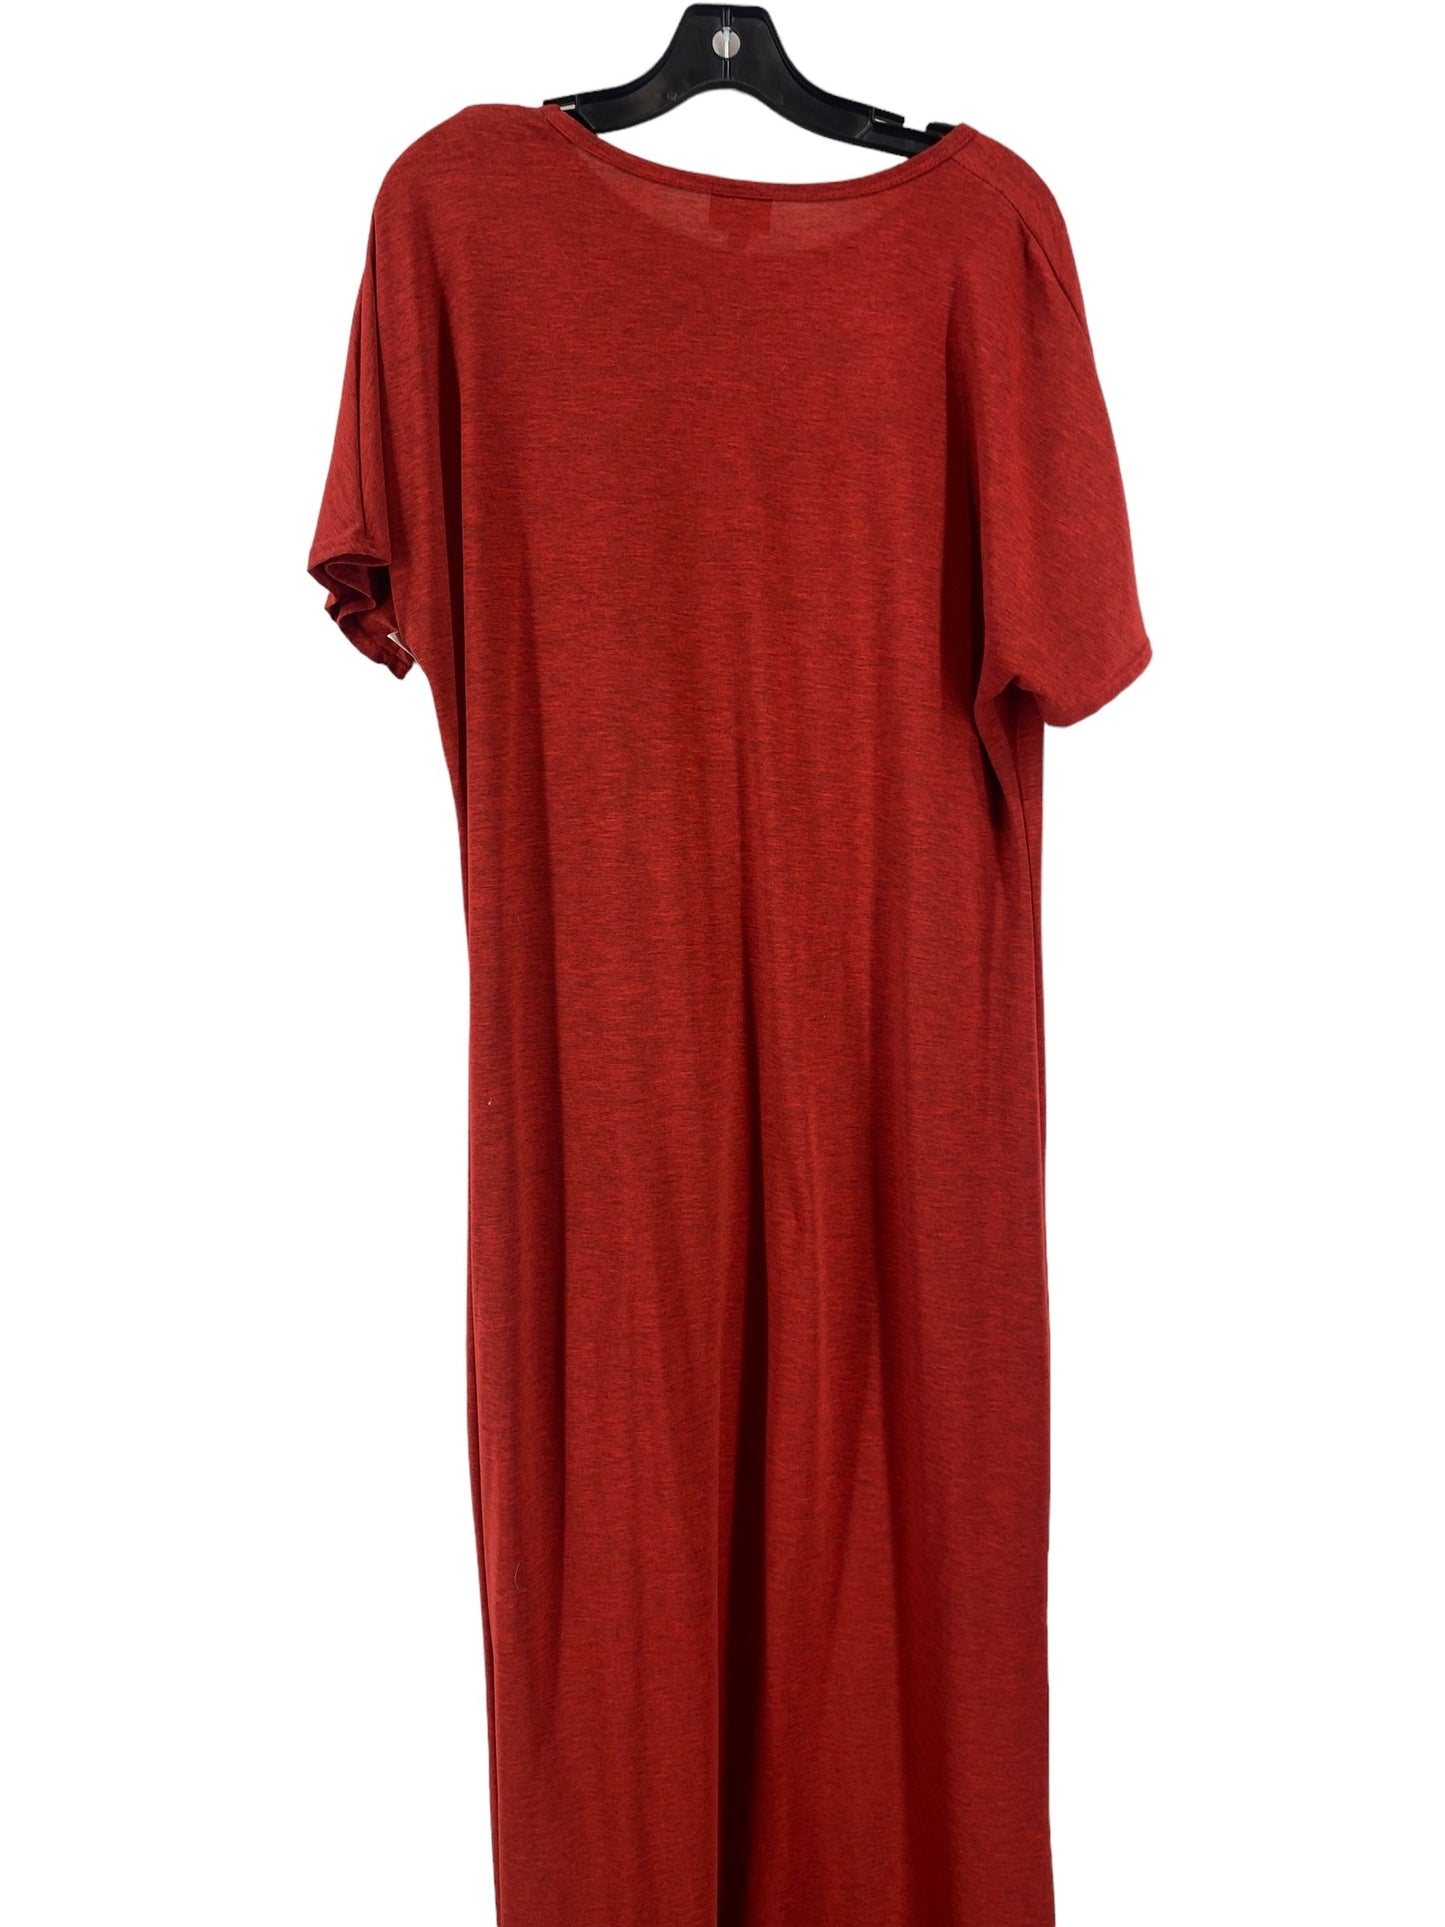 Dress Casual Maxi By Lularoe  Size: Xl